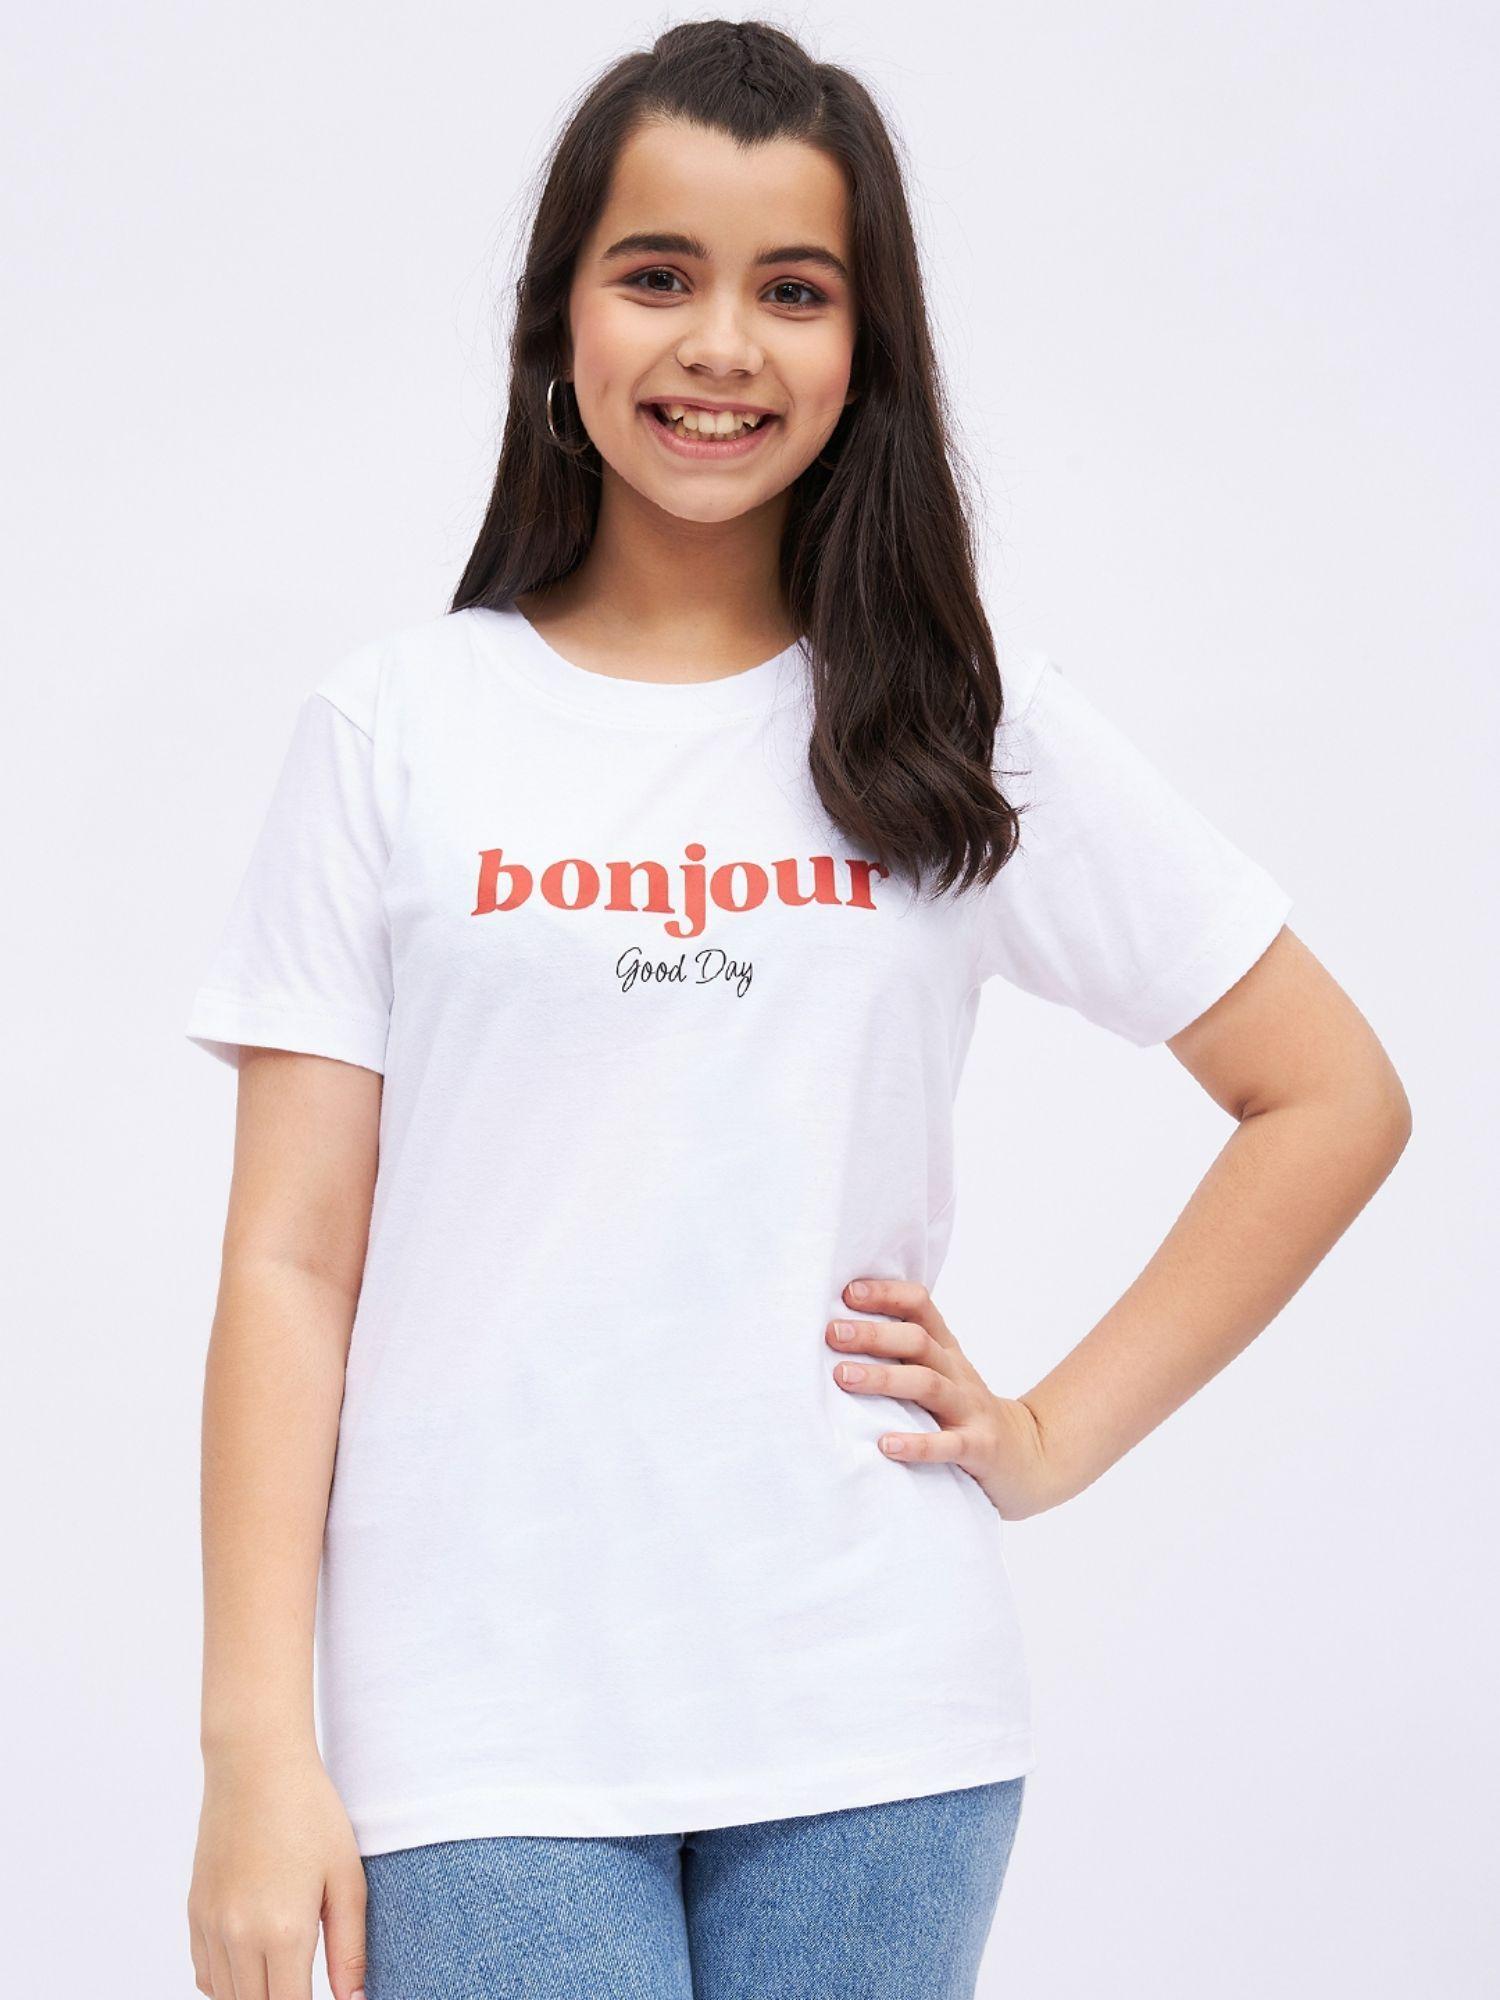 bonjour printed t-shirt